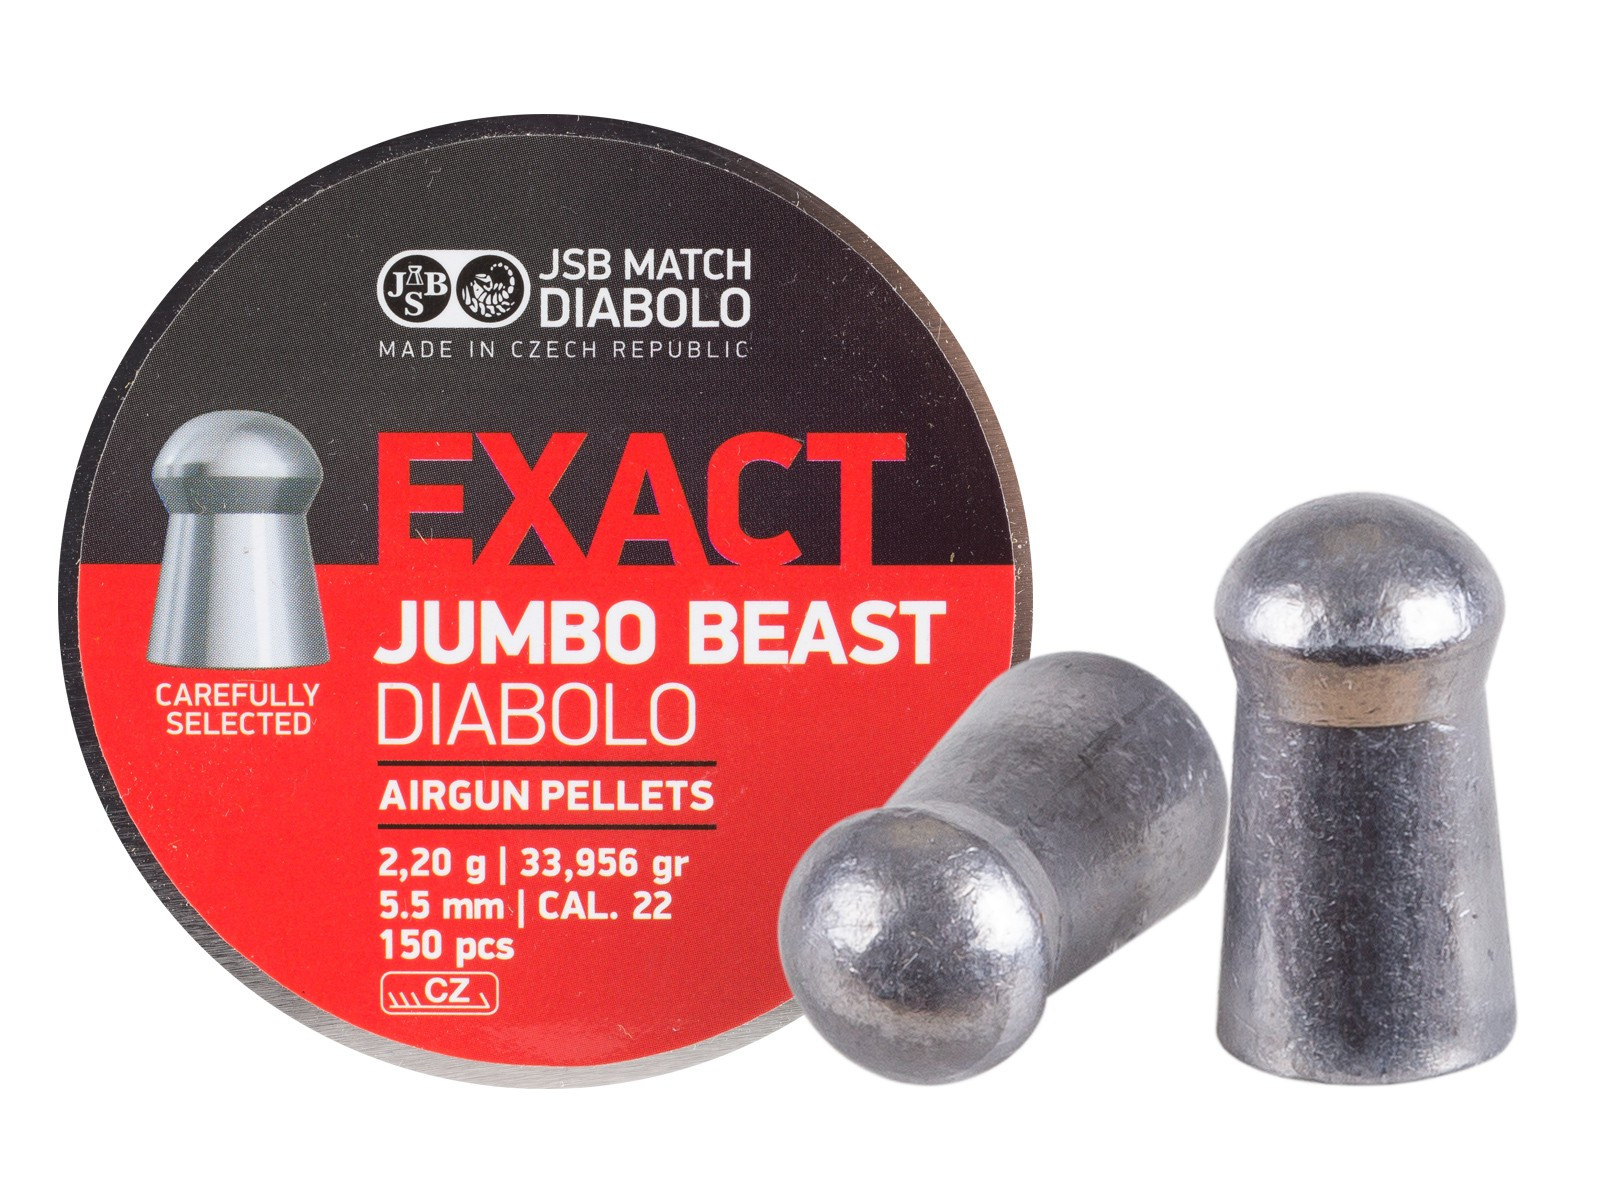 JSB Diabolo Exact Jumbo Beast .22 Cal, 33.96 gr - 150 ct